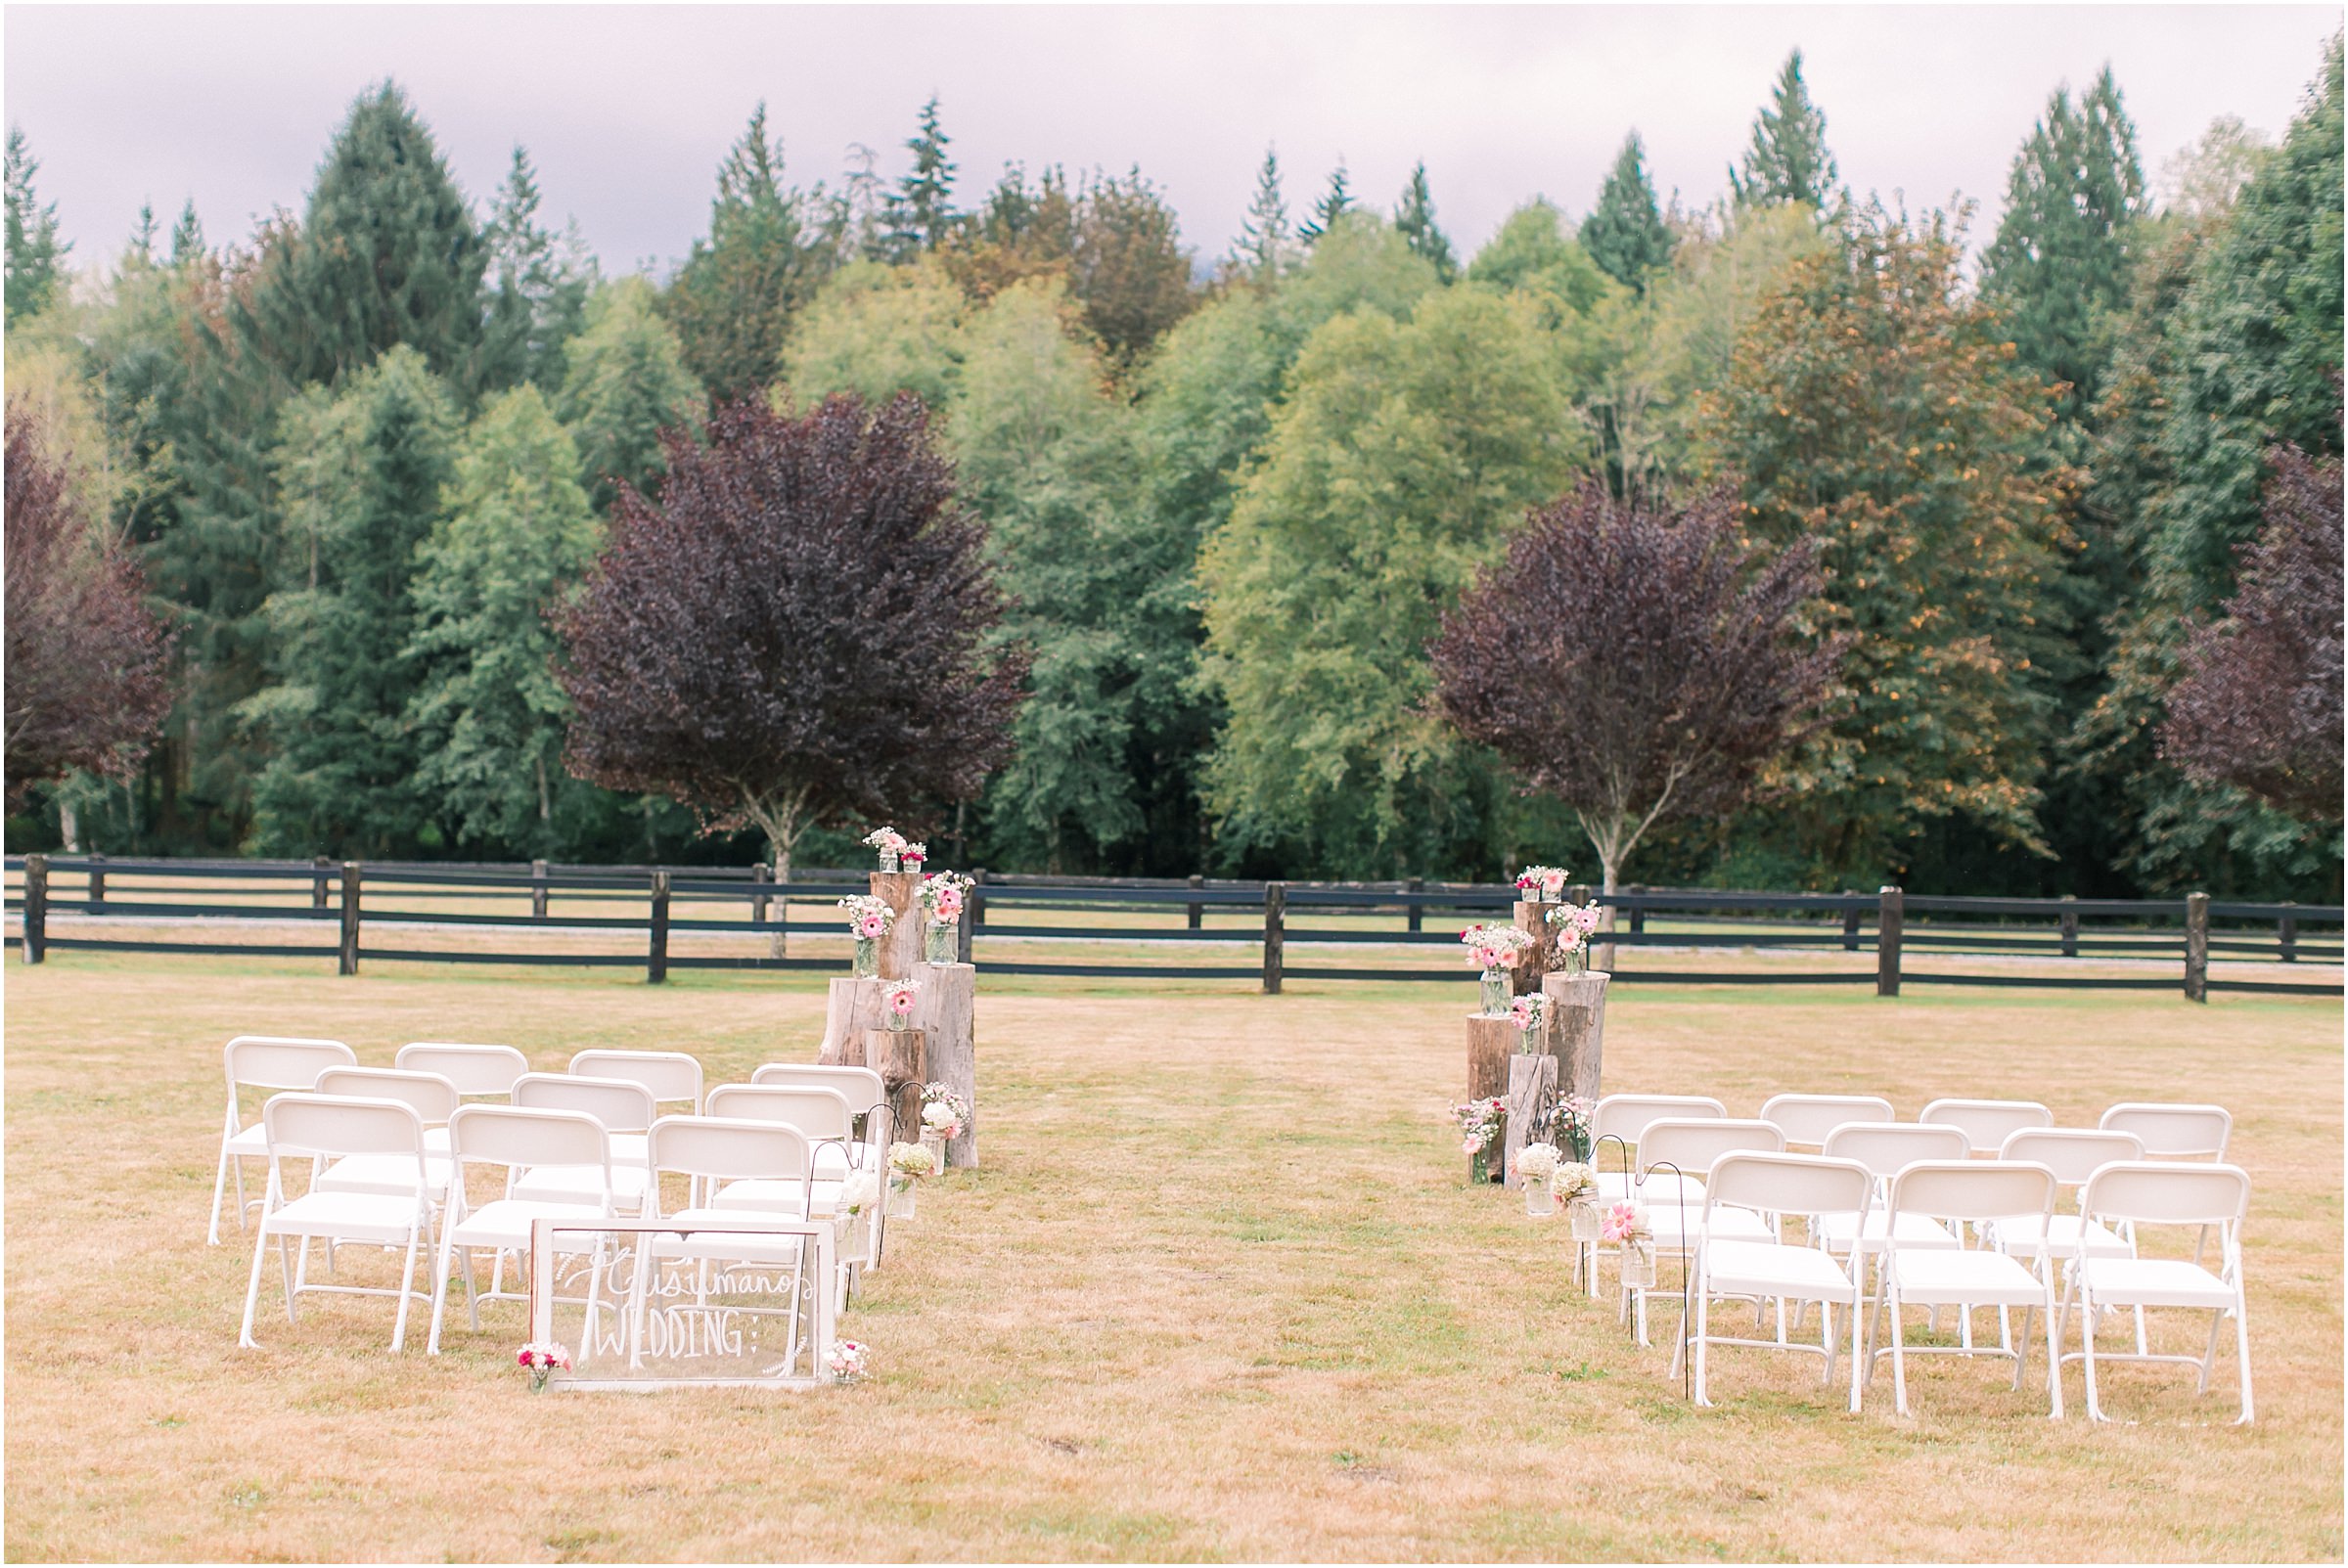 Intimate Backyard Wedding | Kristian & Brooke